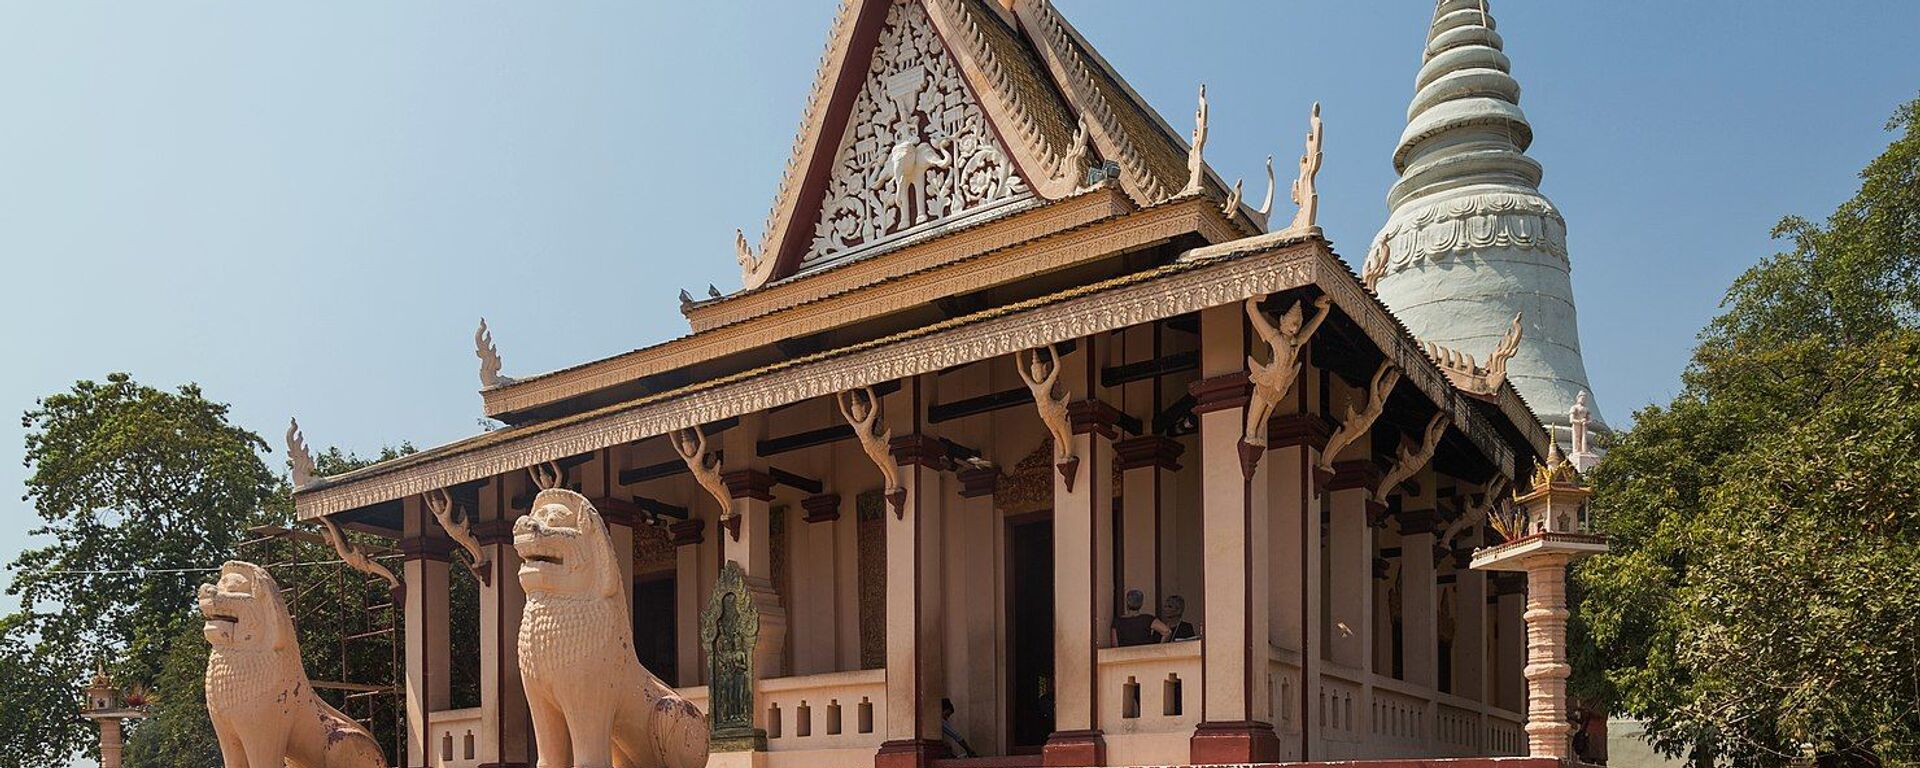 Chùa Wat Phnom - Sputnik Việt Nam, 1920, 22.02.2022